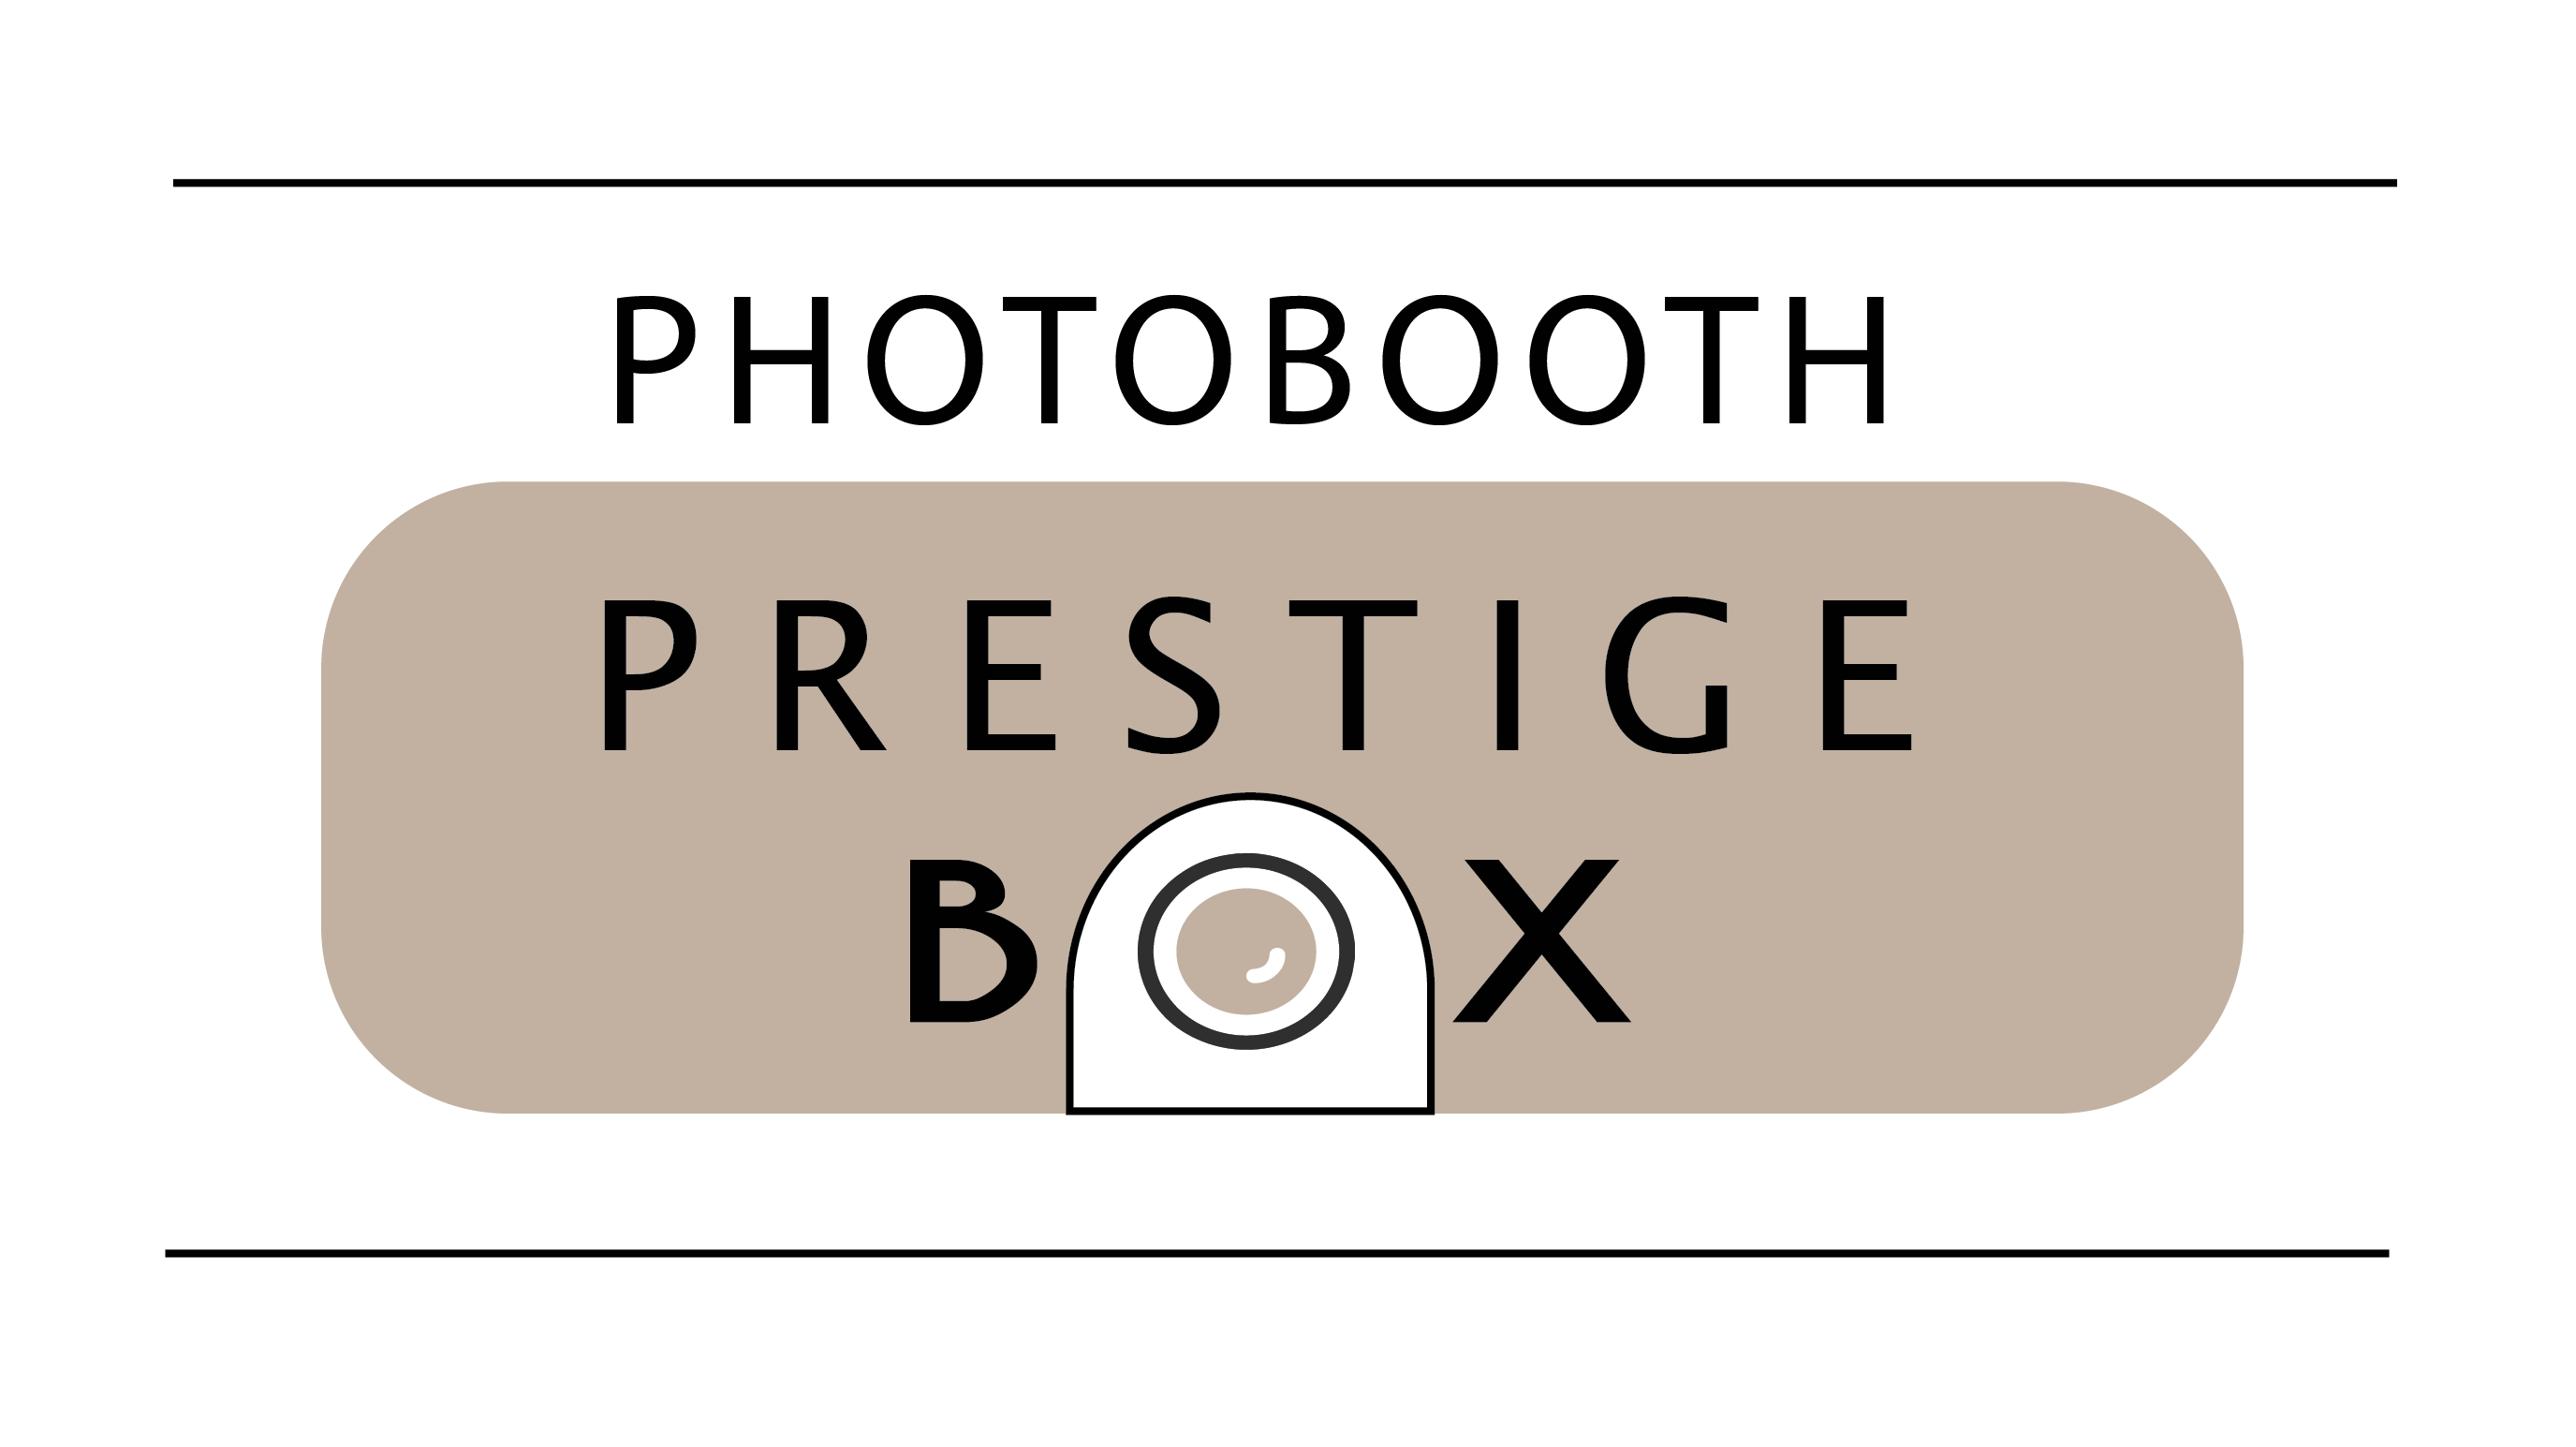 PhotoBooth Prestige Box